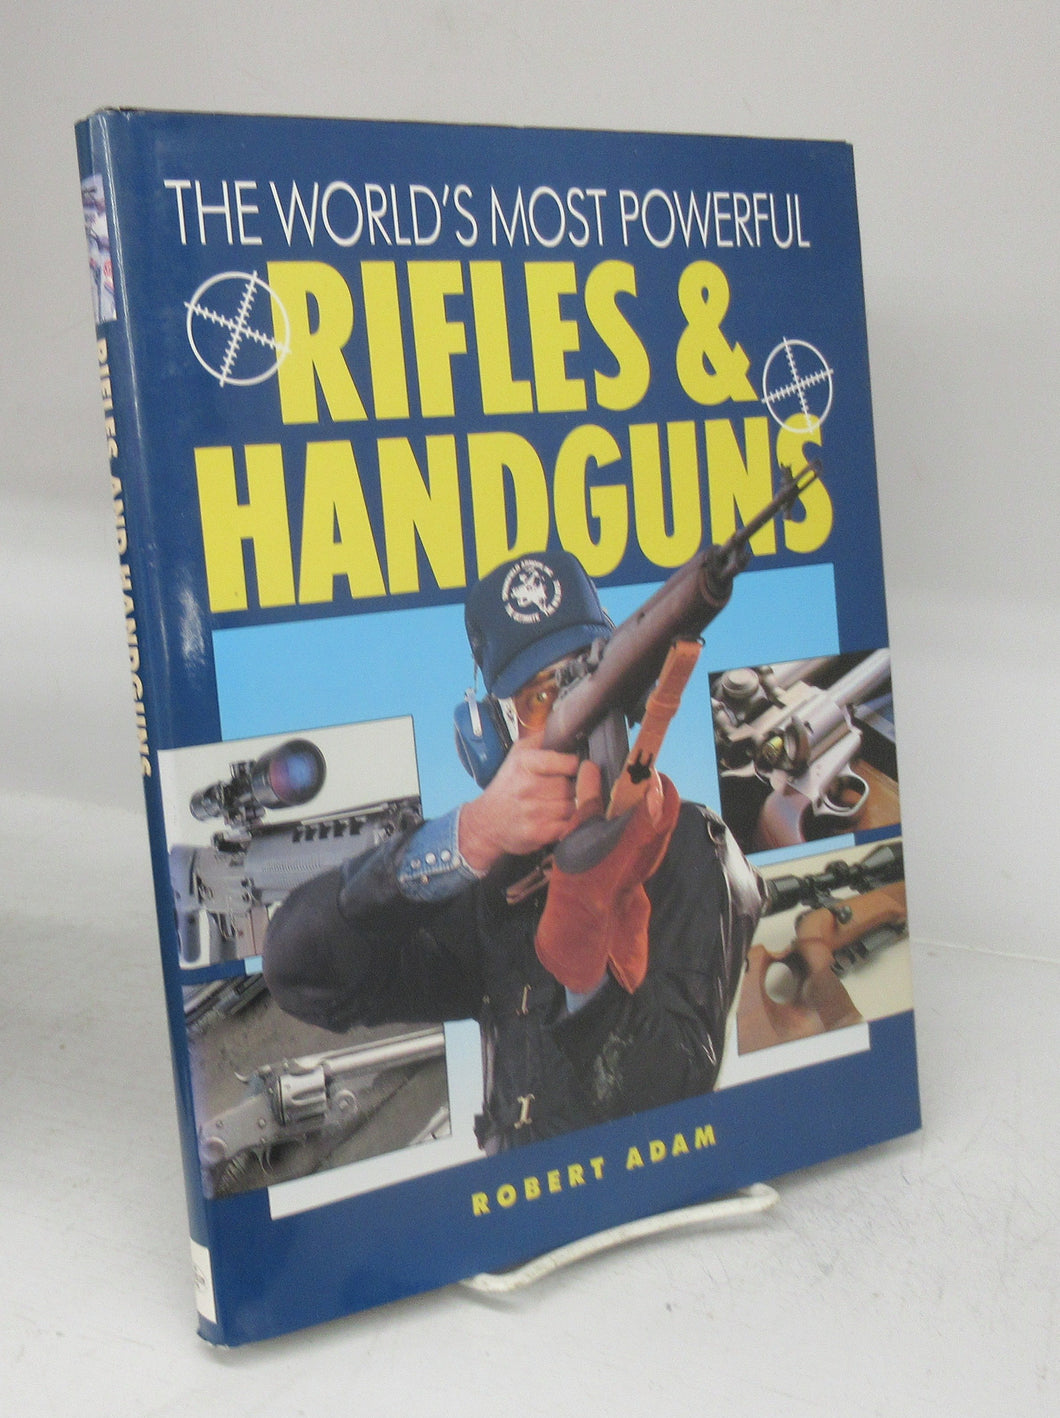 The World's Most Powerful Rifles & Handguns